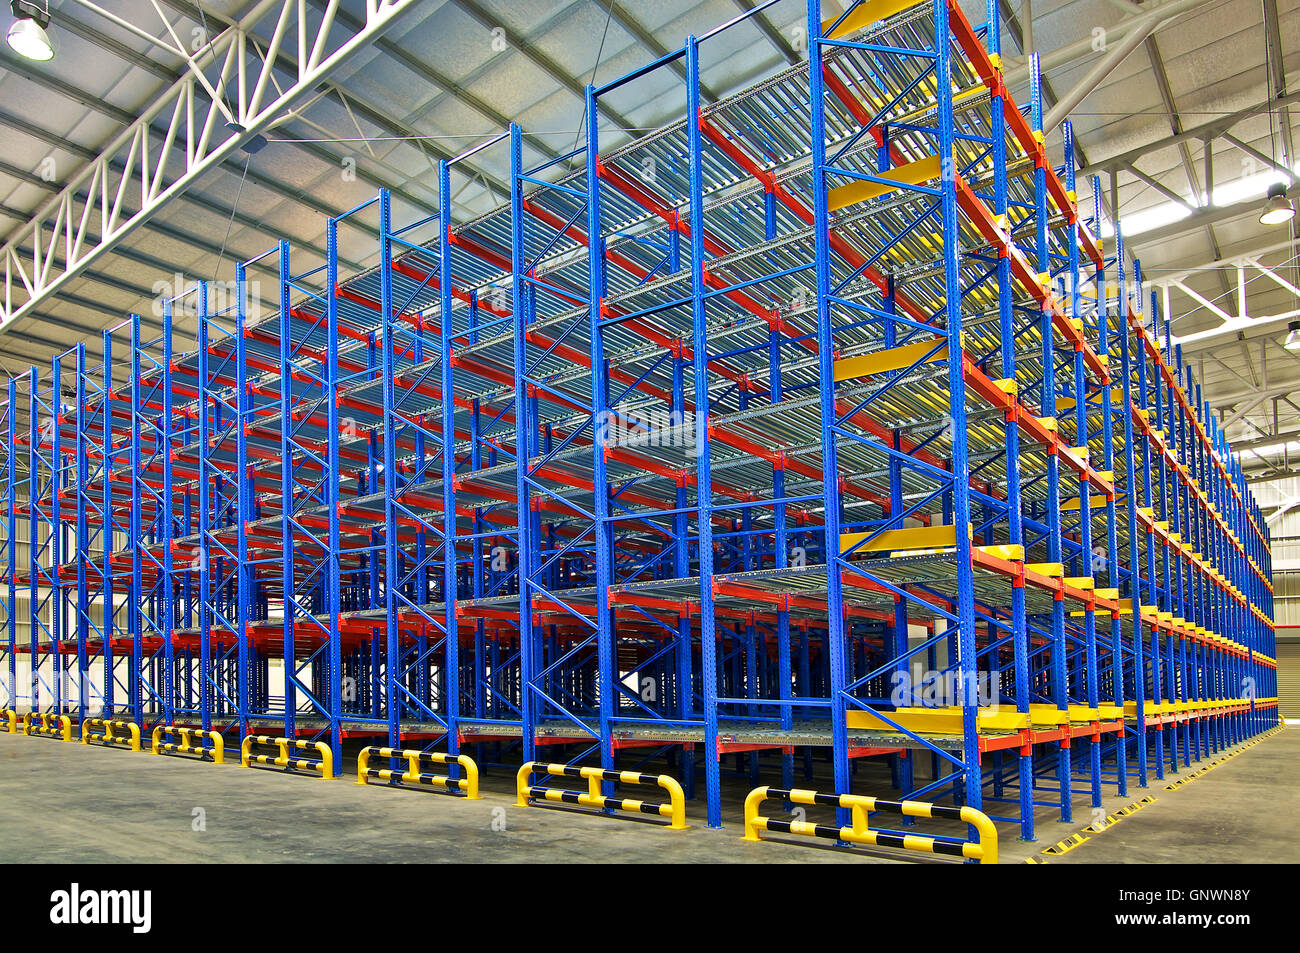 Distribution center warehouse storage shelving metal racking system Stock Photo